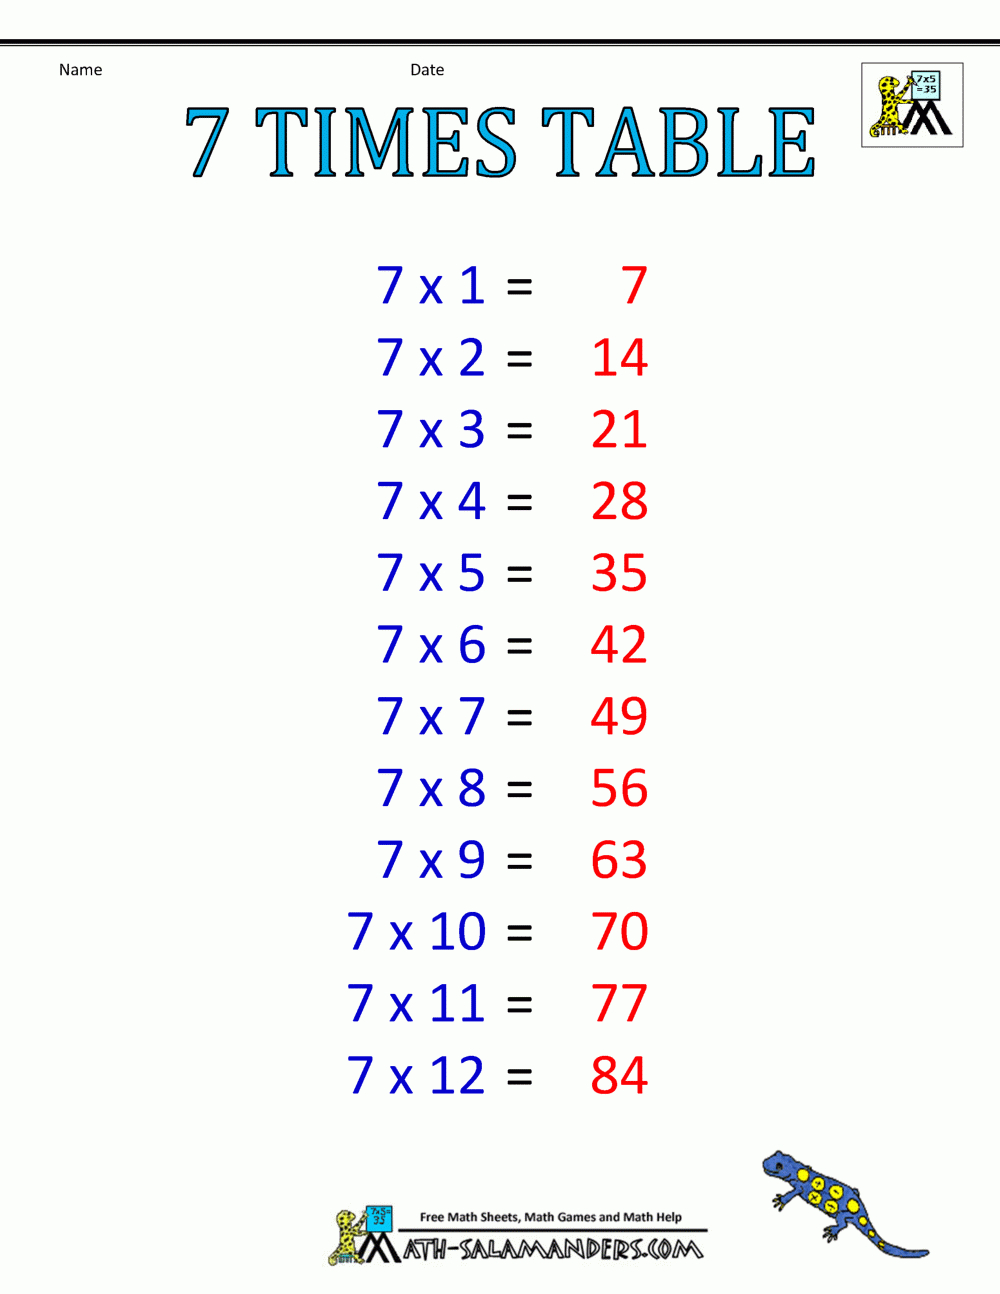  Multiplication Worksheets 7 12 PrintableMultiplication